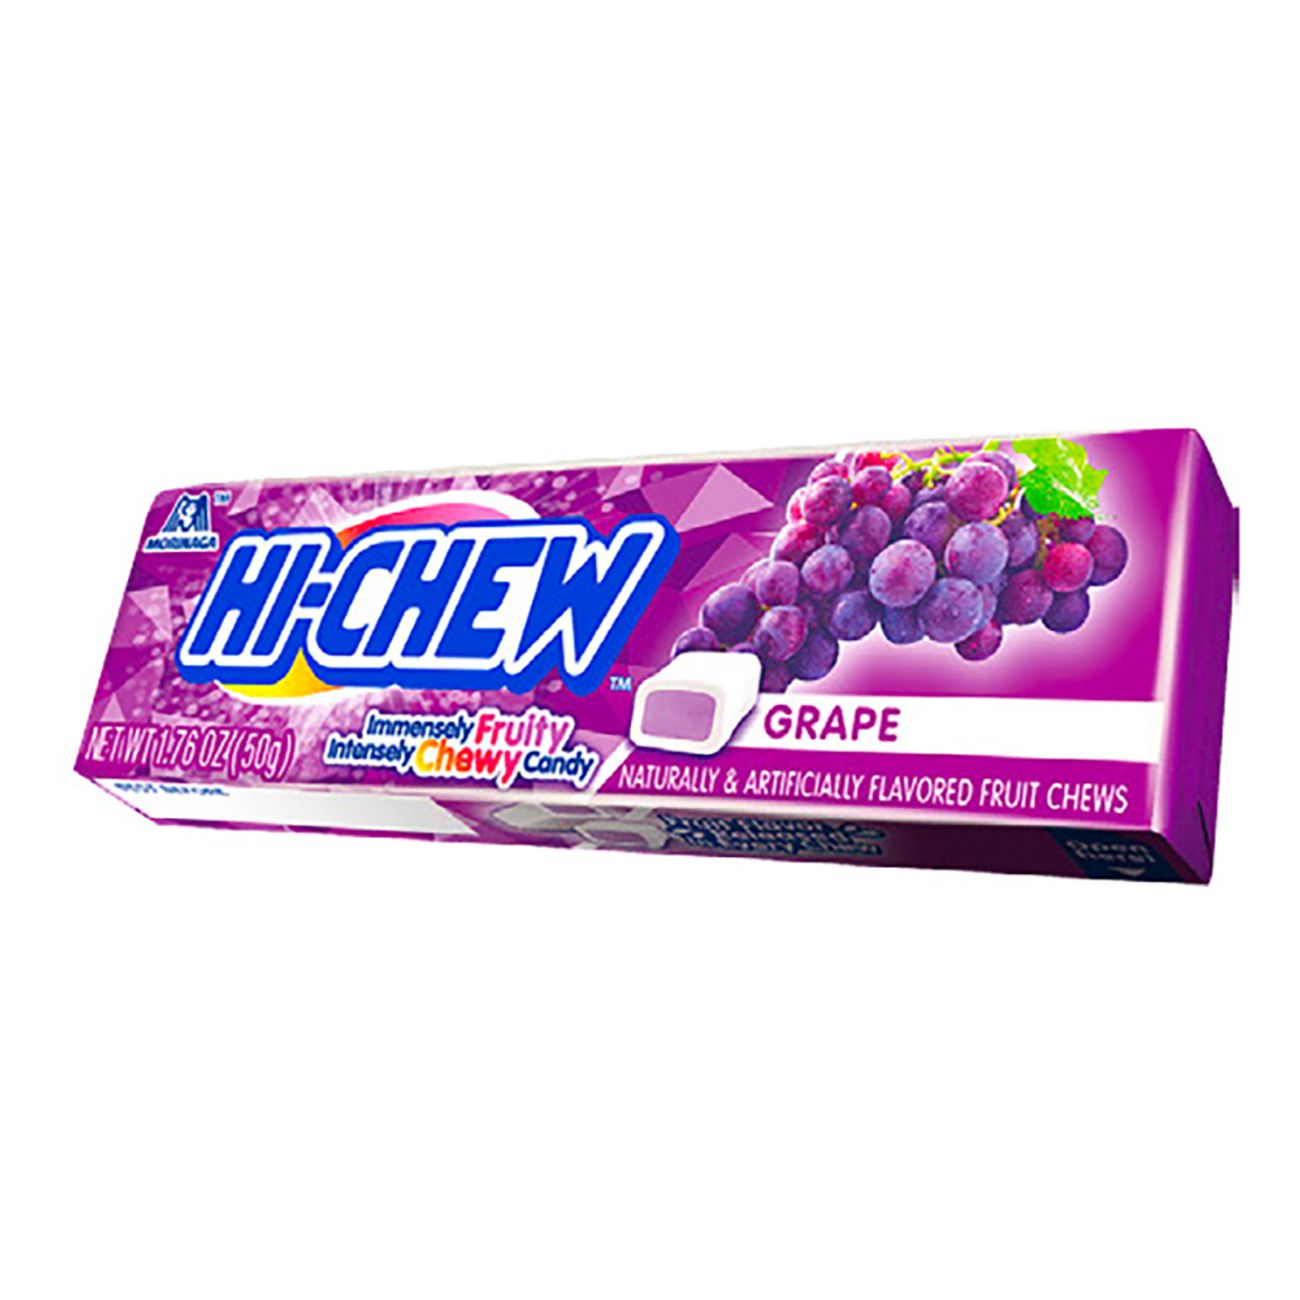 hi-chew-grape-50g-82999-1